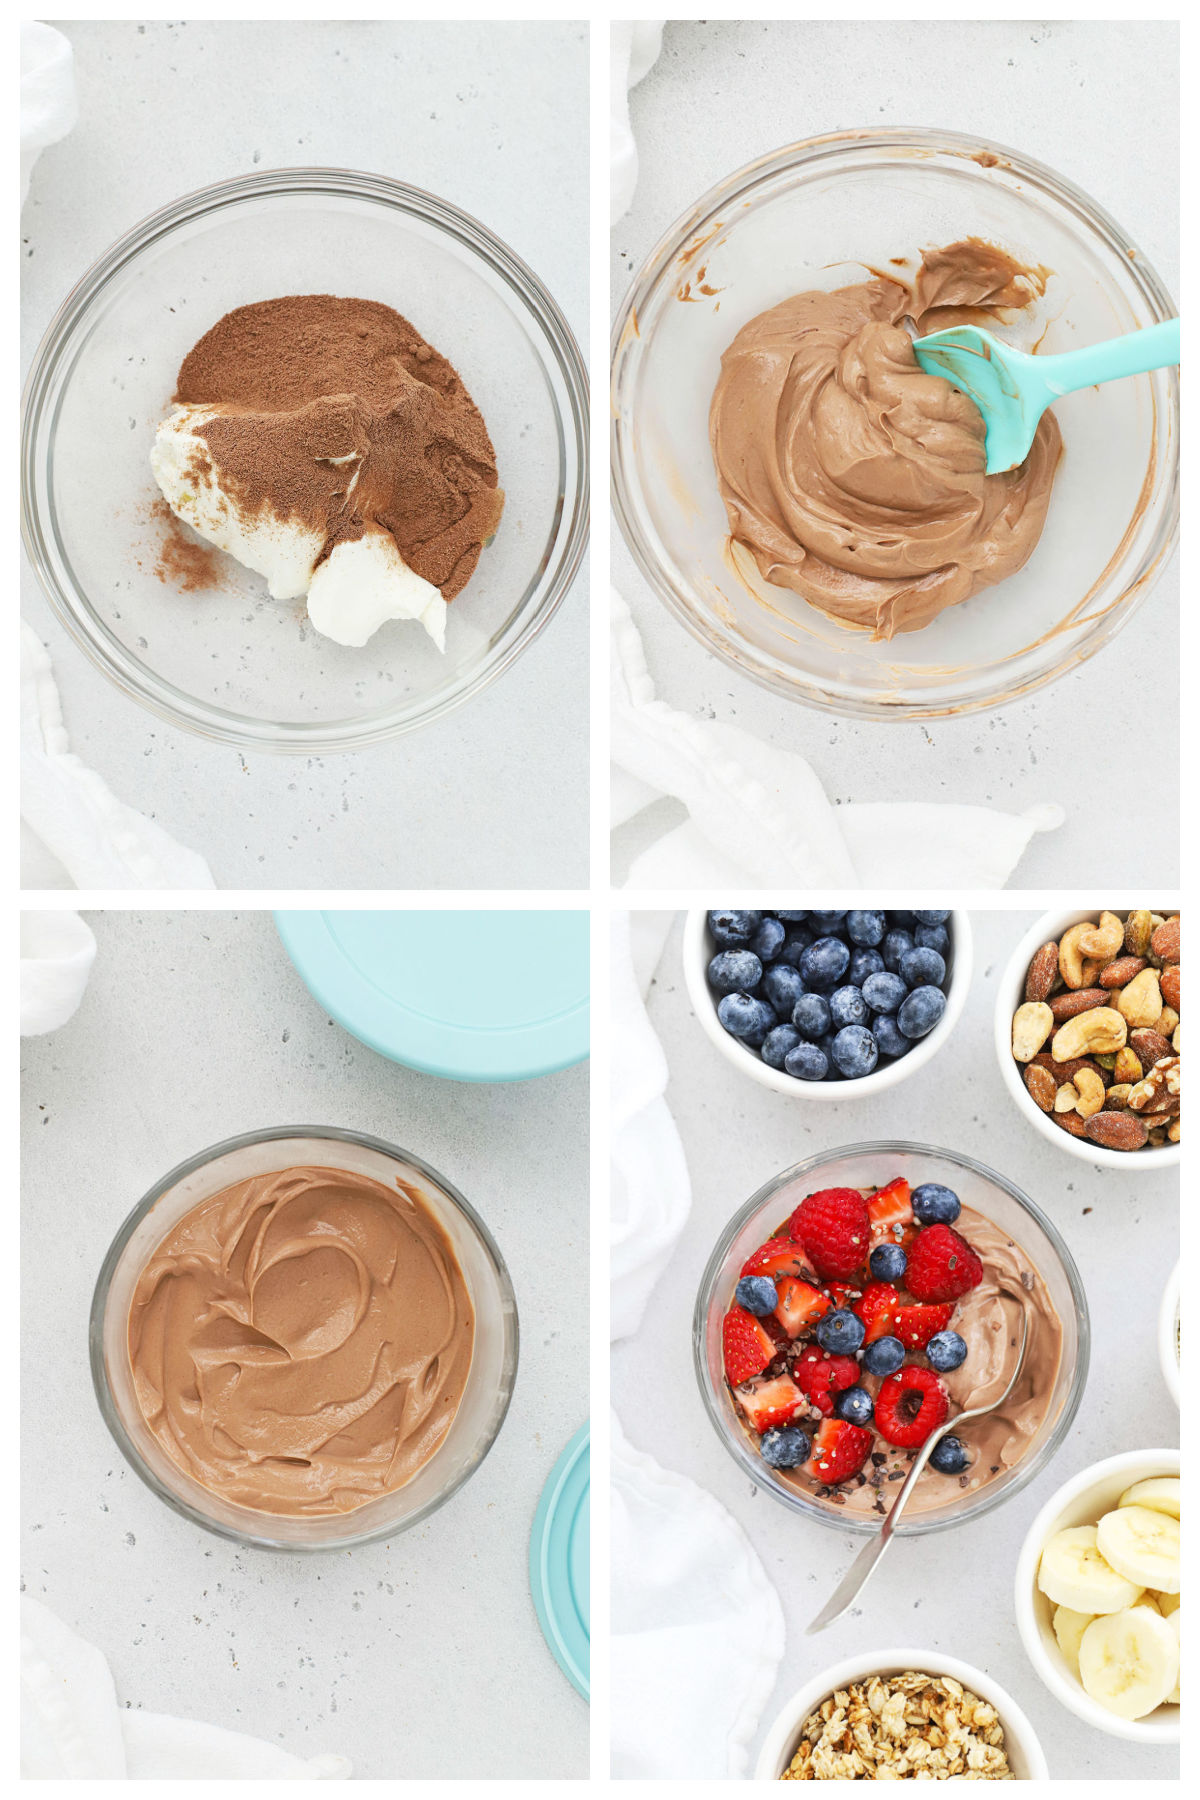 Making chocolate protein yogurt bowls, step by step